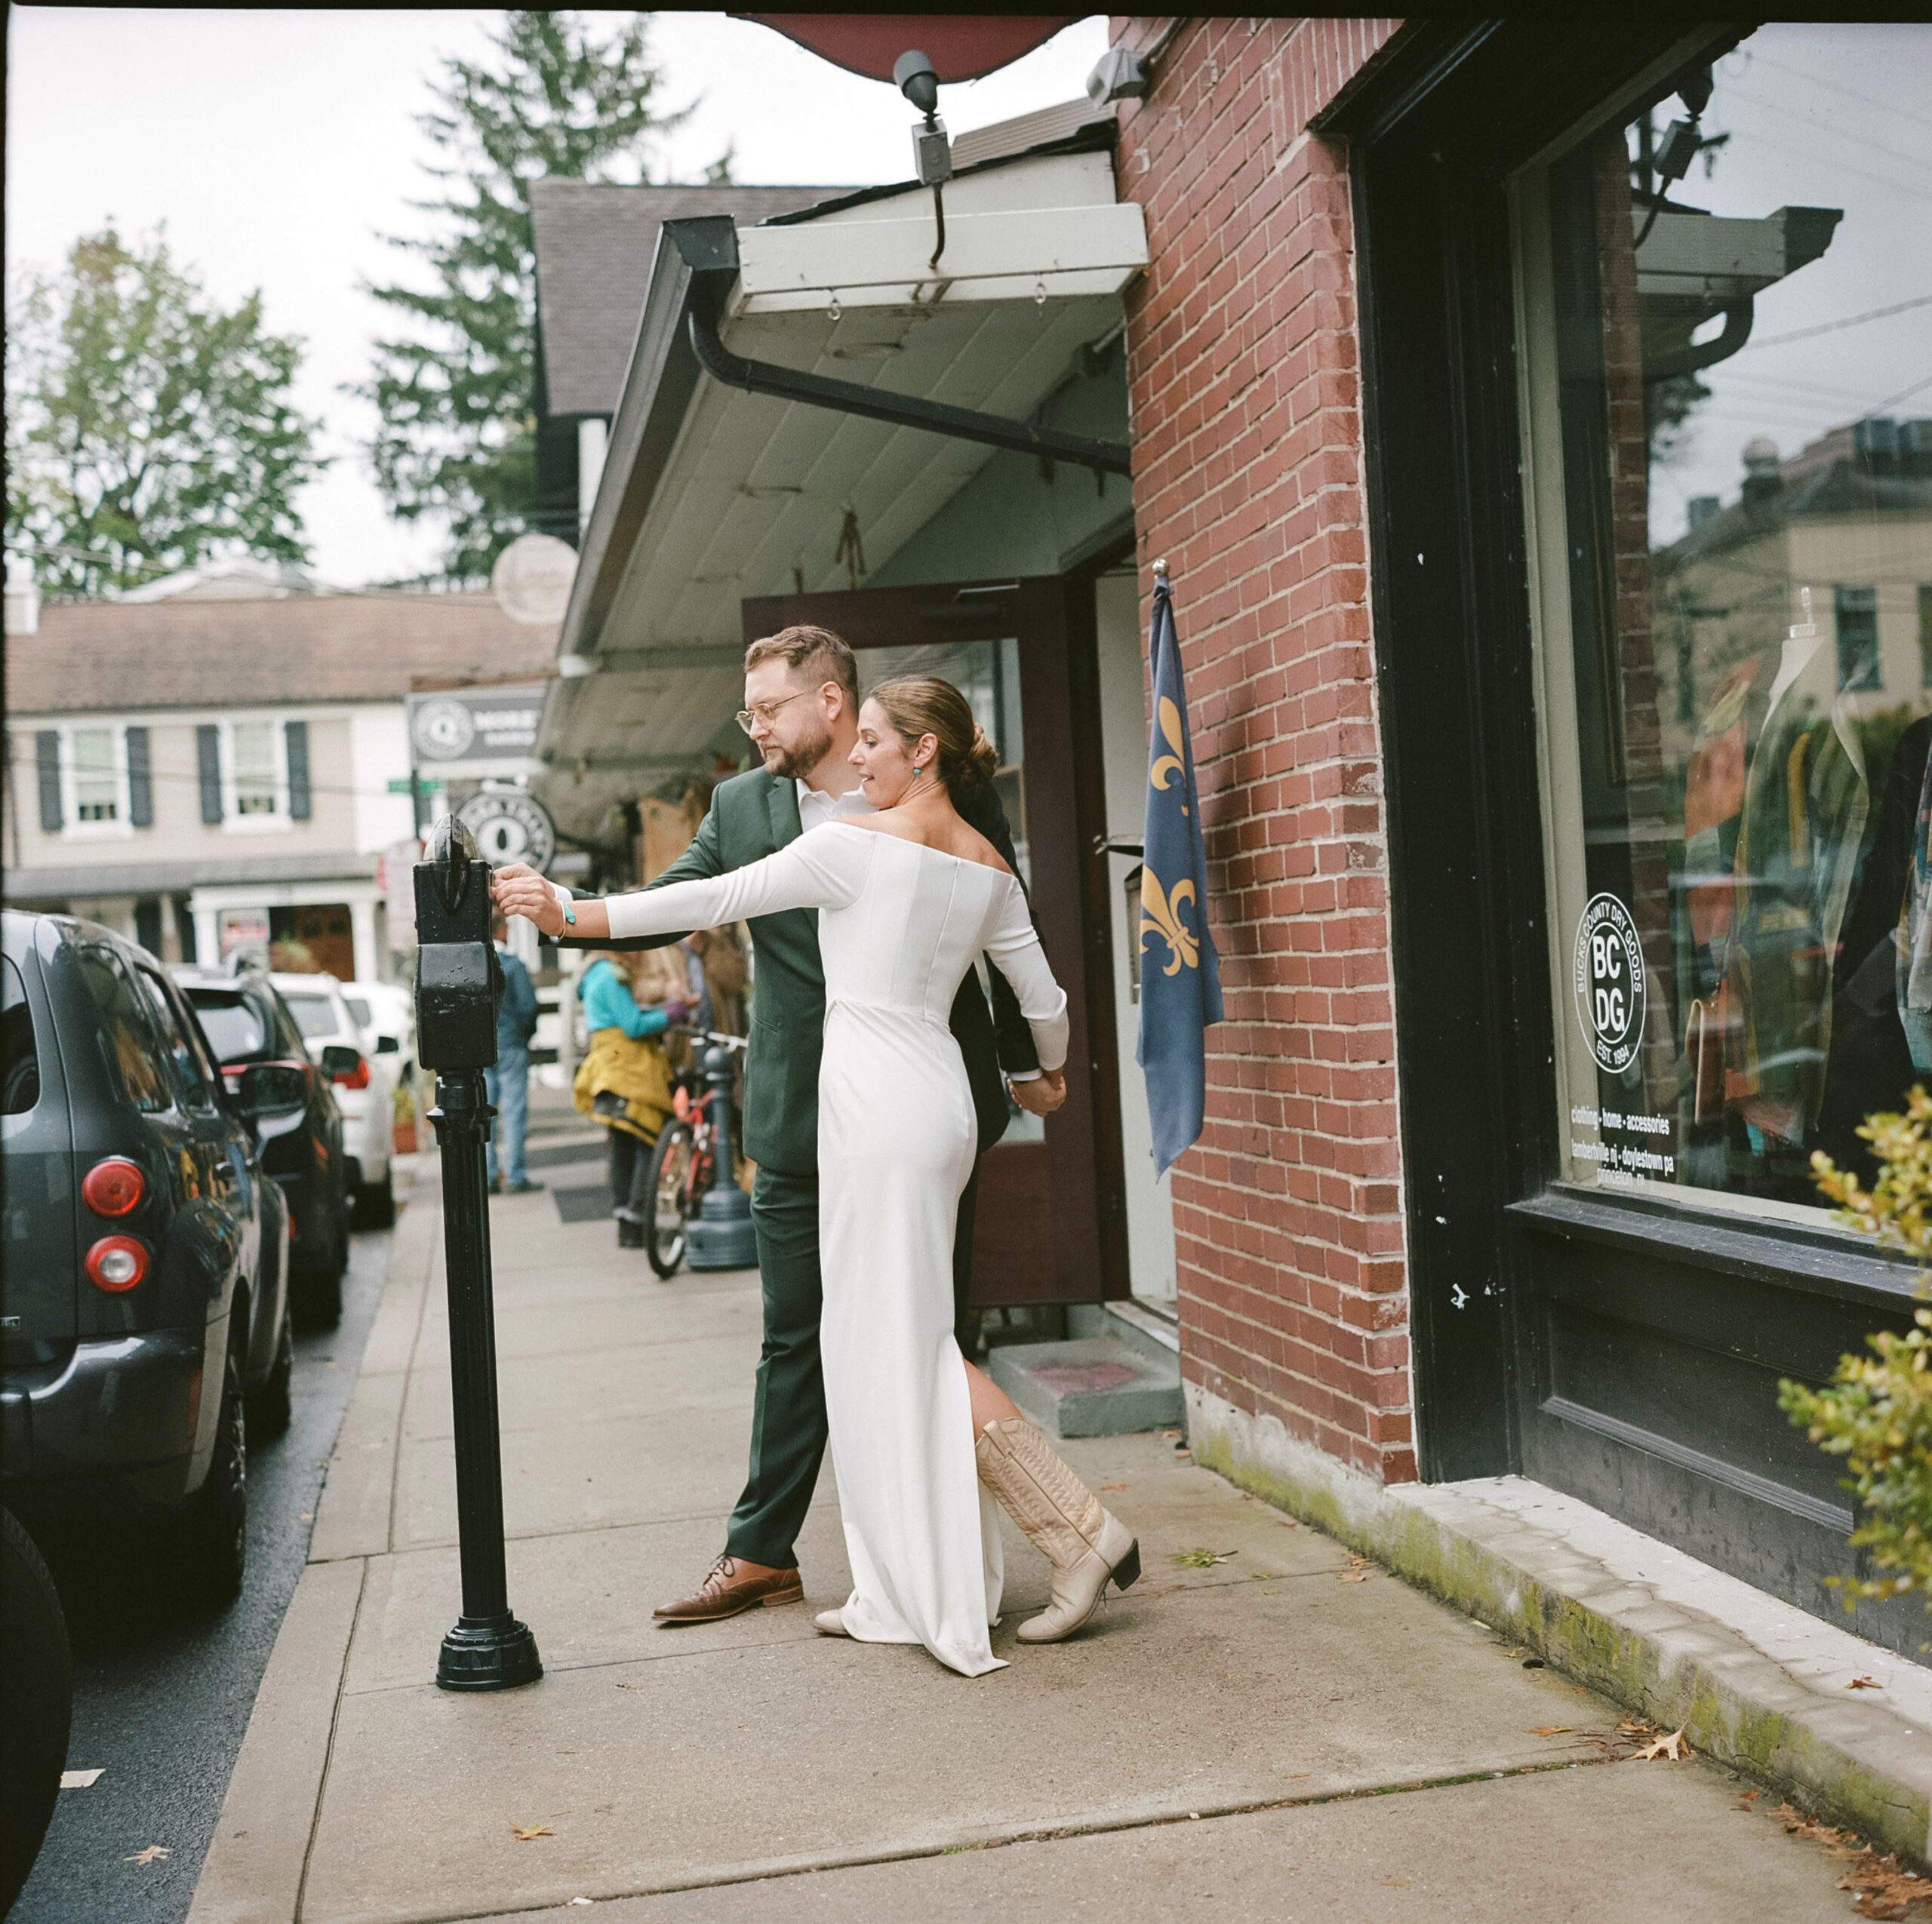 Color photo on medim format film of an elegant Bride playfully checking her parking meter outside Brian's restaurant in Lambertville, NJ